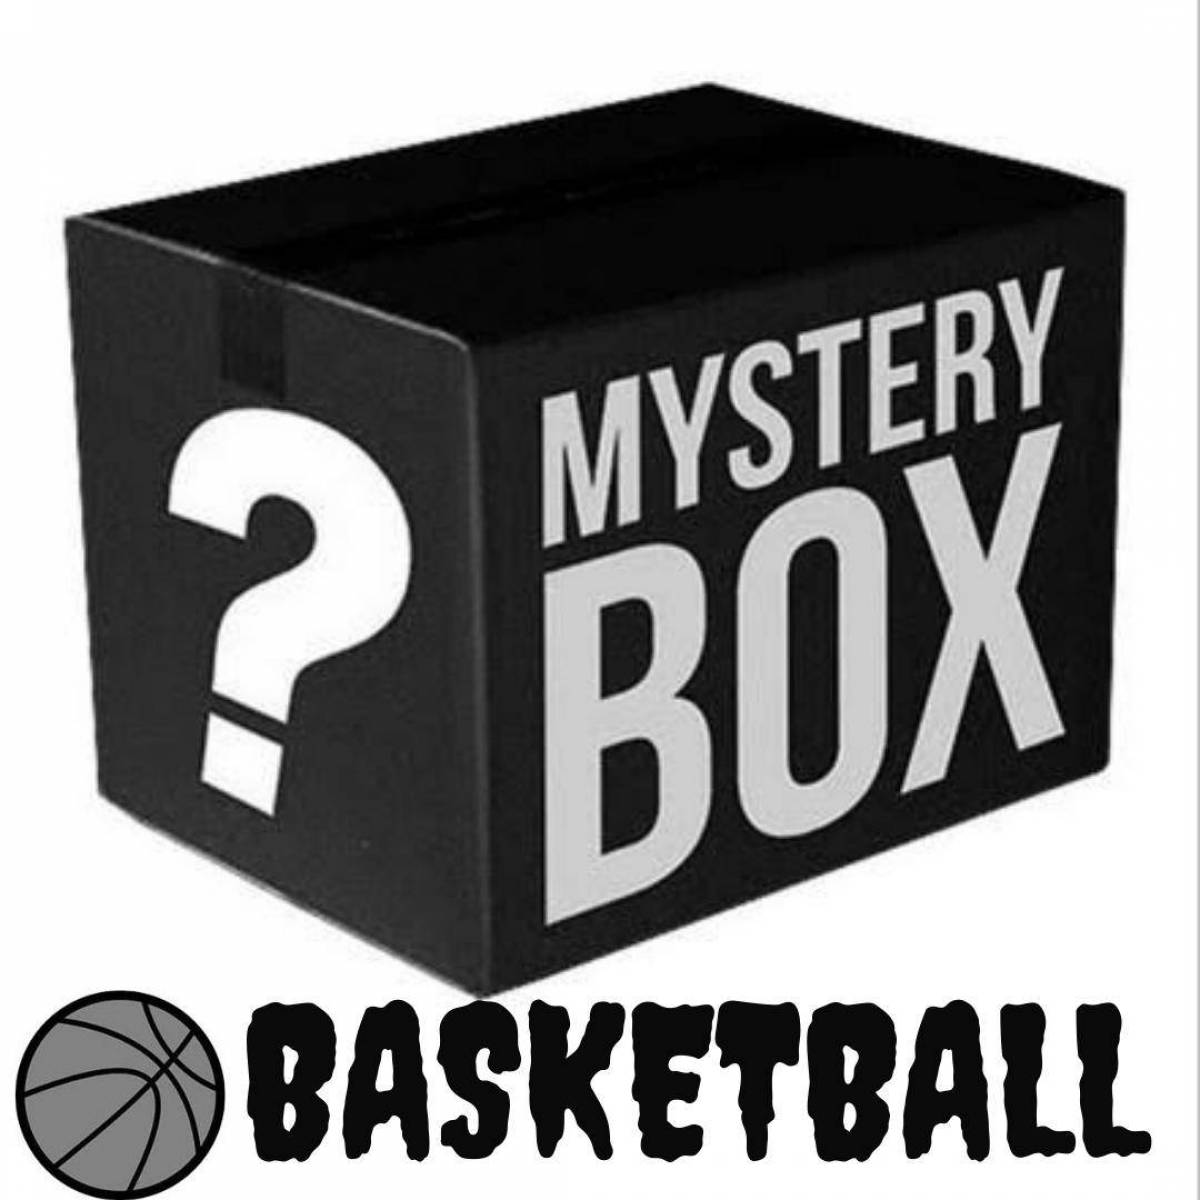 Charon's enchanting mystery box